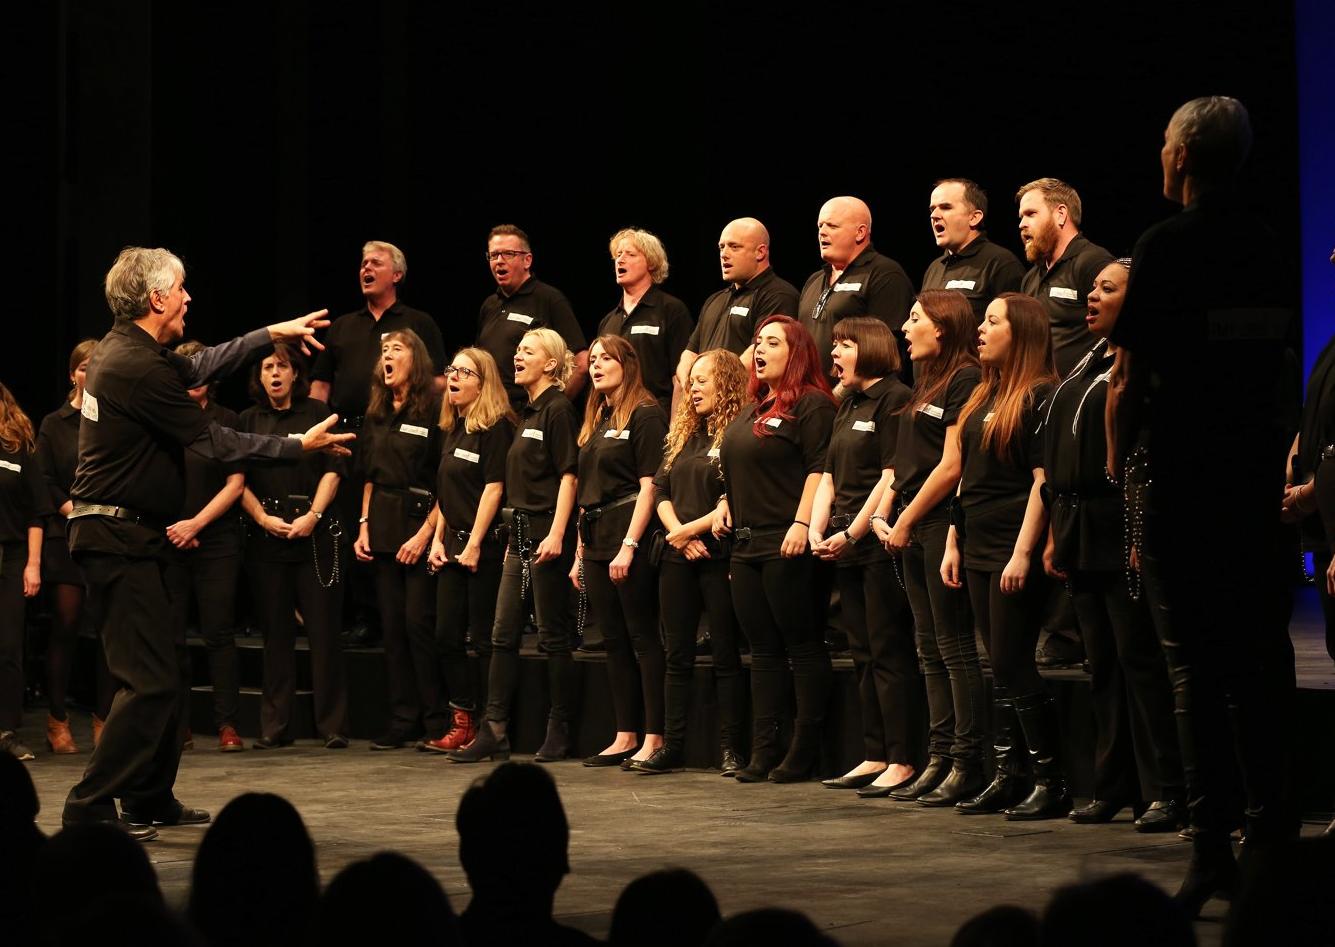 Lewes Prison's staff choir perform. Photograph by Sam Stephenson/ Homelink